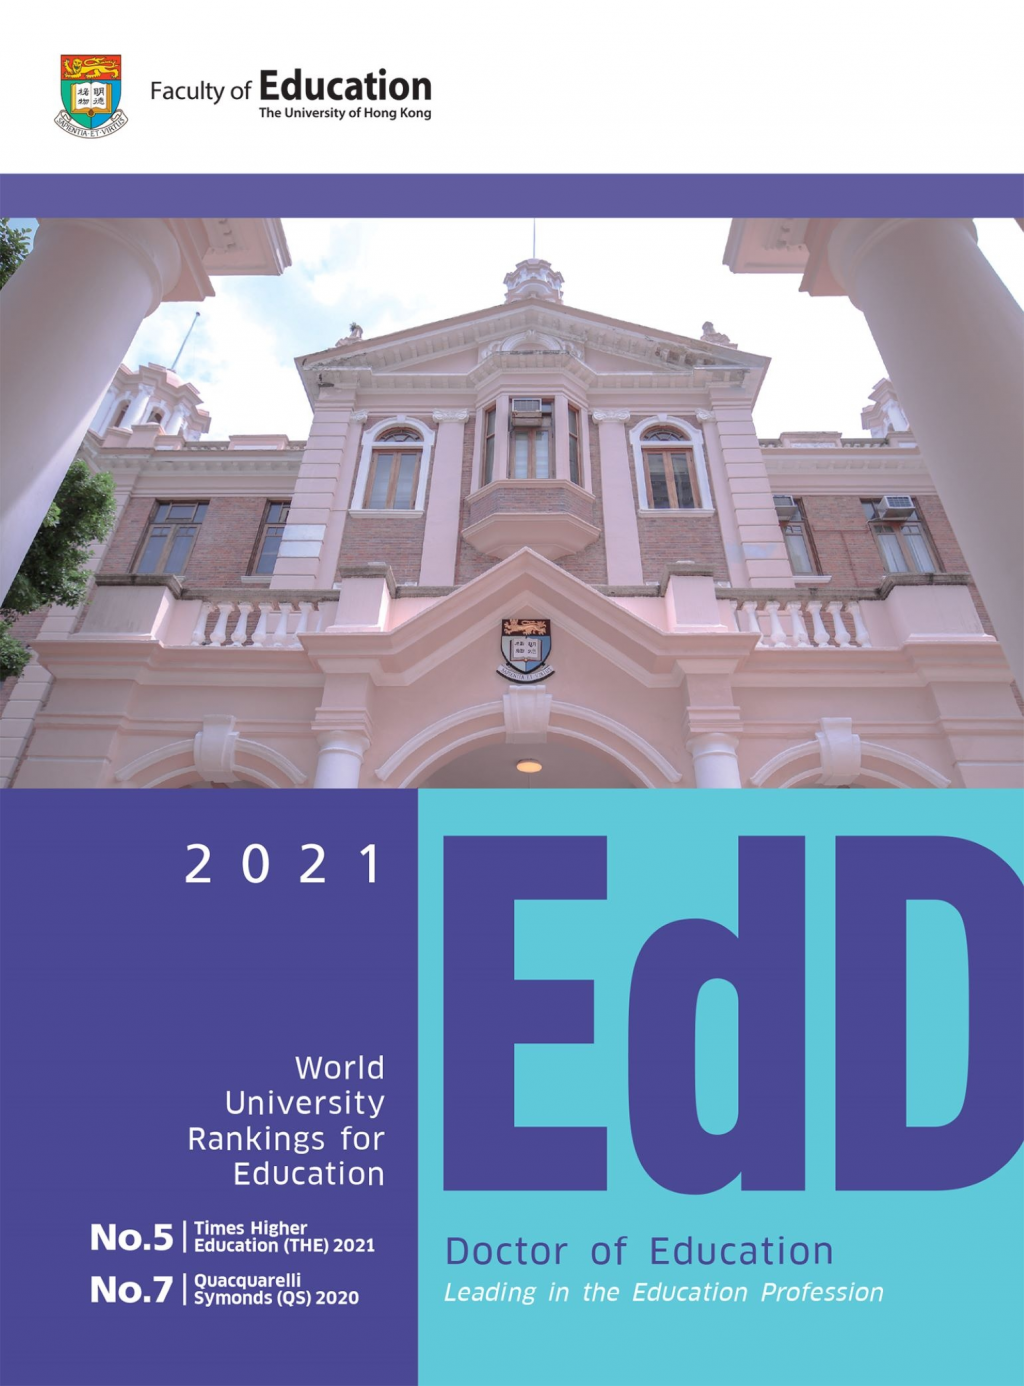 Application of Doctor of Education (EdD)